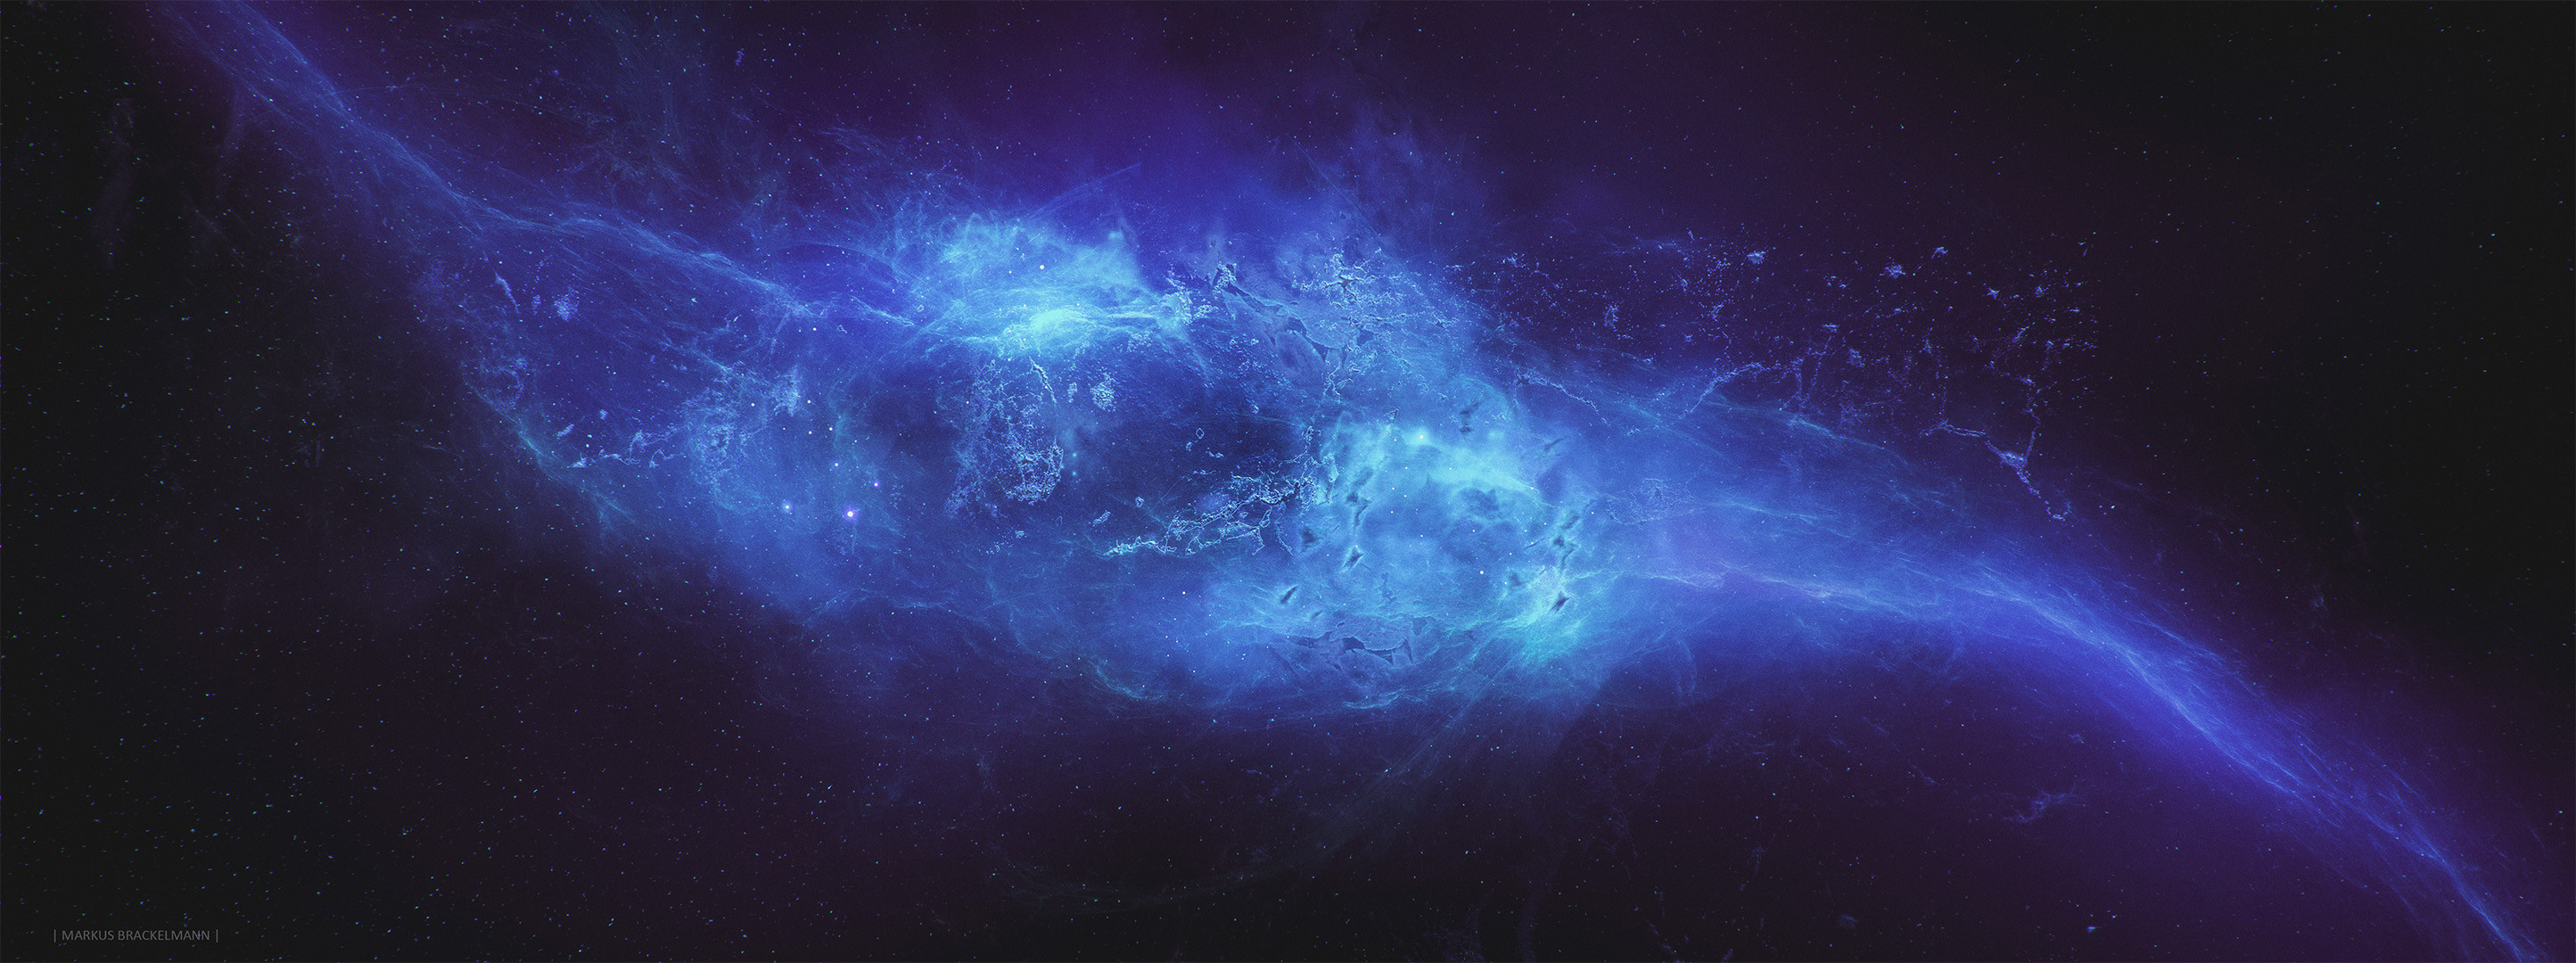 markus-braxxy-brackelmann-nebula-02-jpg.jpg